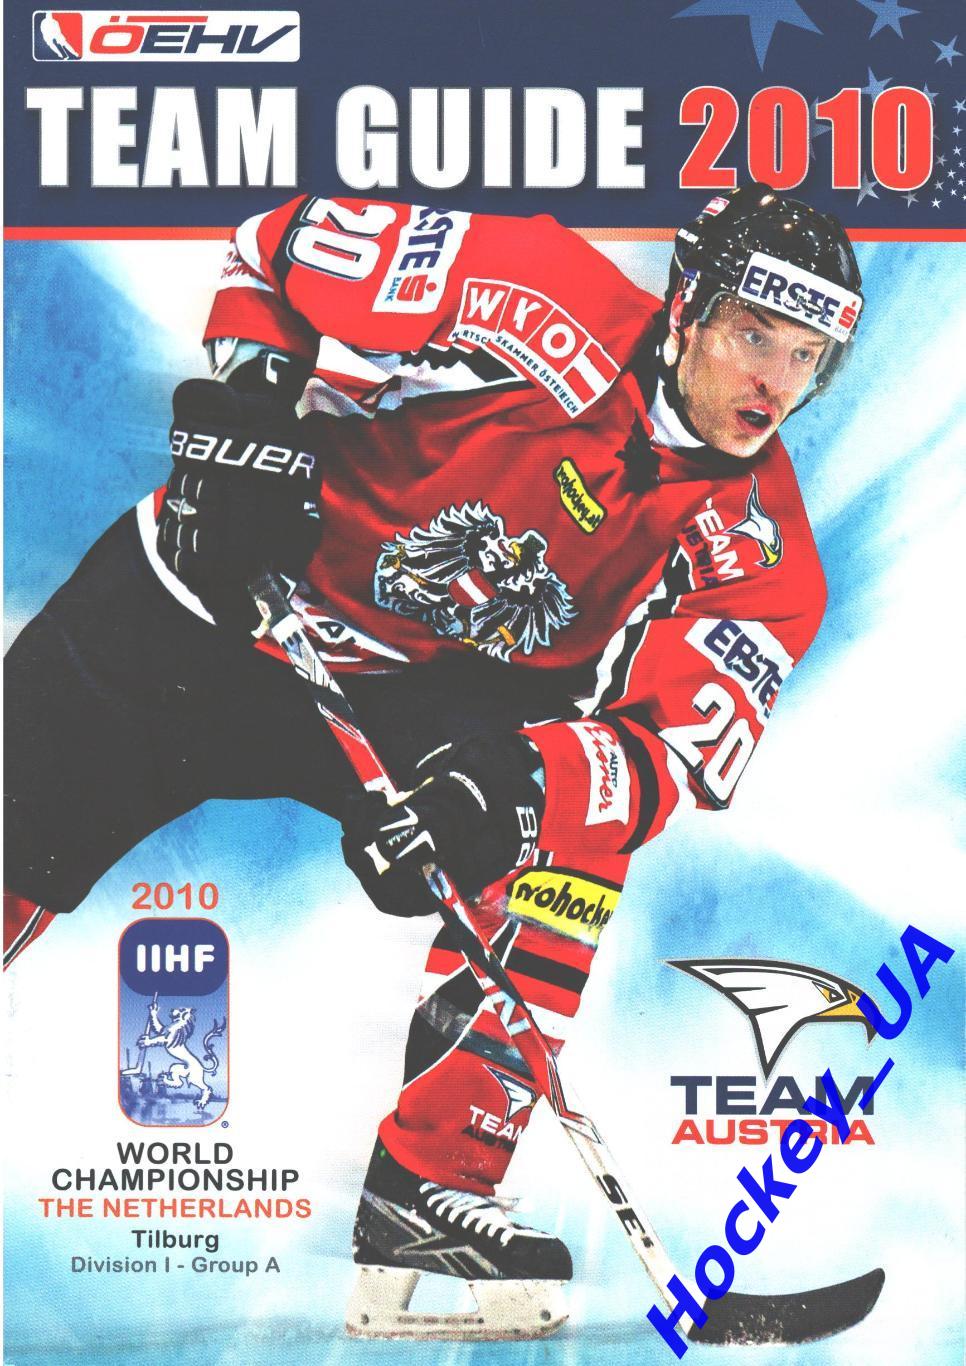 Team guide 2010 Austria IIHF World Championship